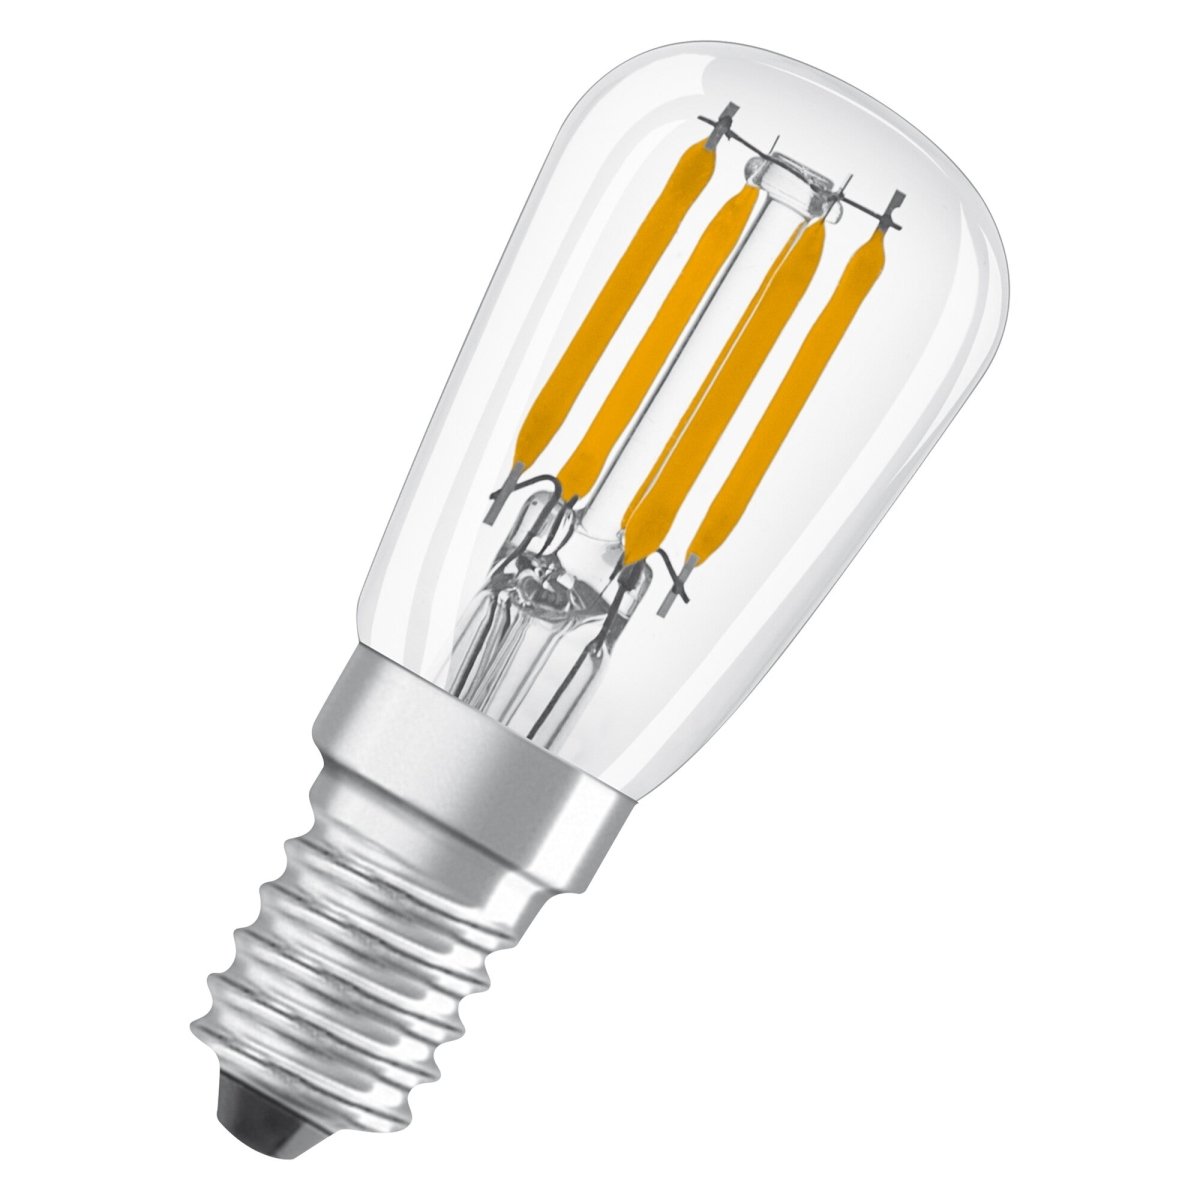 Specjalna lampa LED SPECIAL T26 E14 220-240V 2,8 W - eshop LEDVANCE 4058075449954